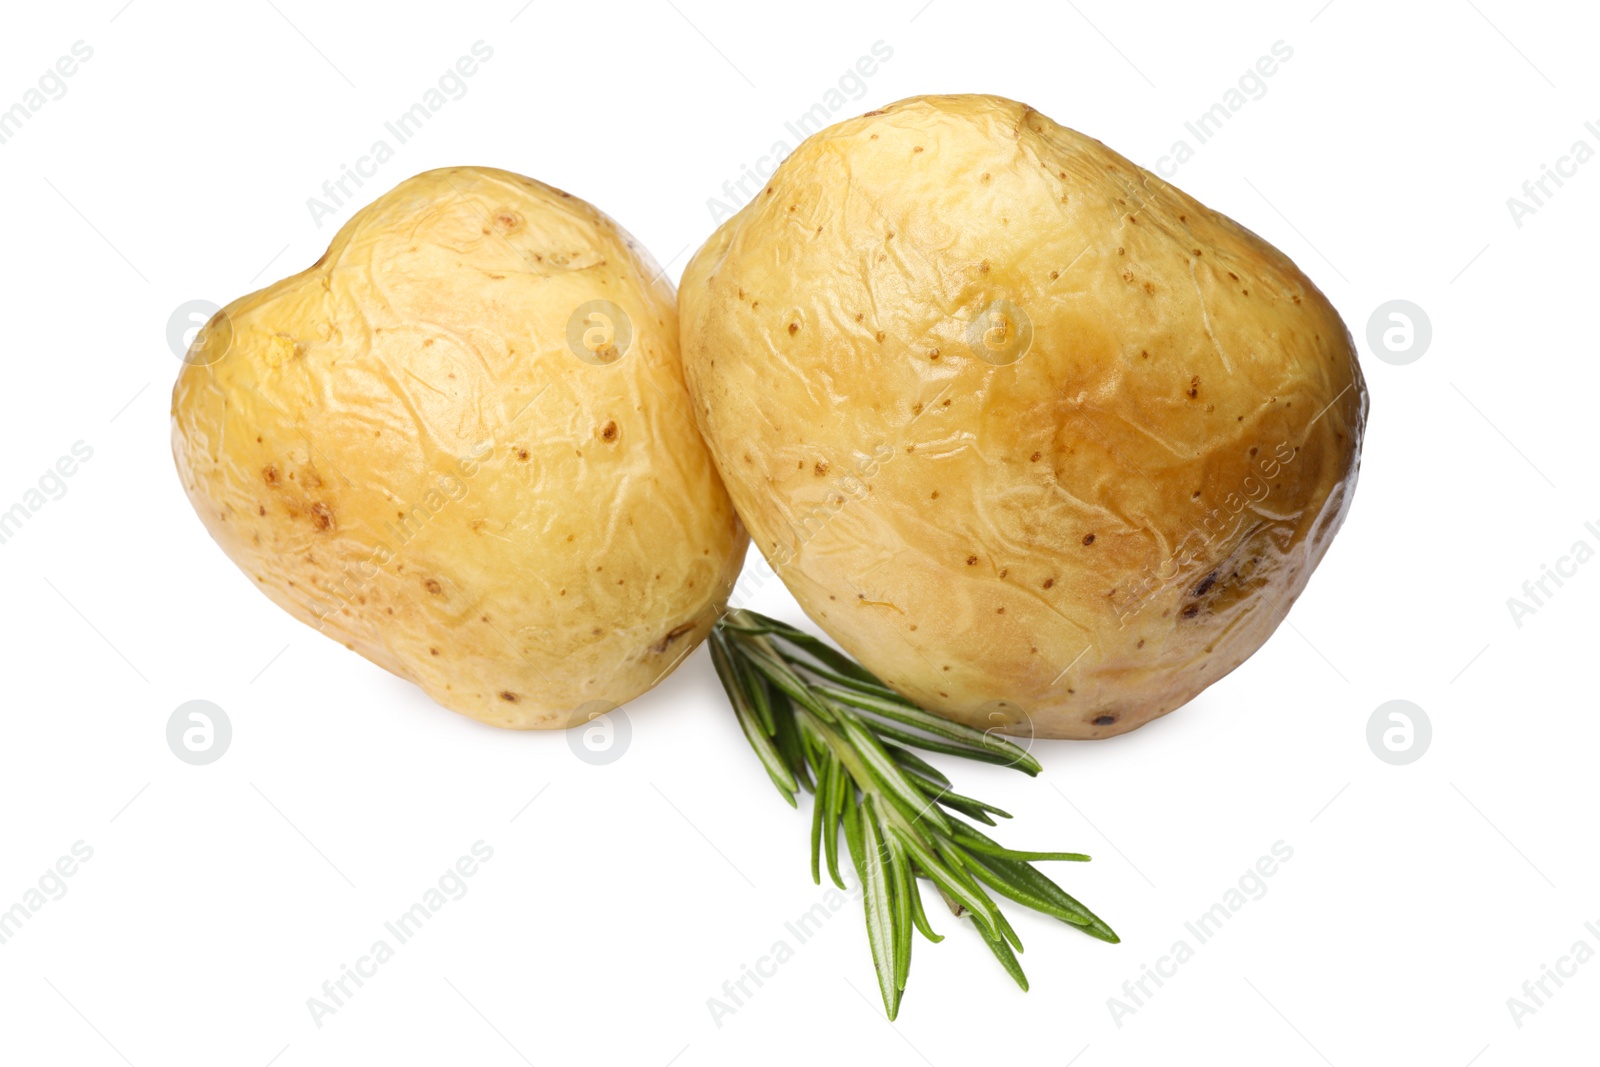 Photo of Tasty whole baked potatoes with rosemary on white background